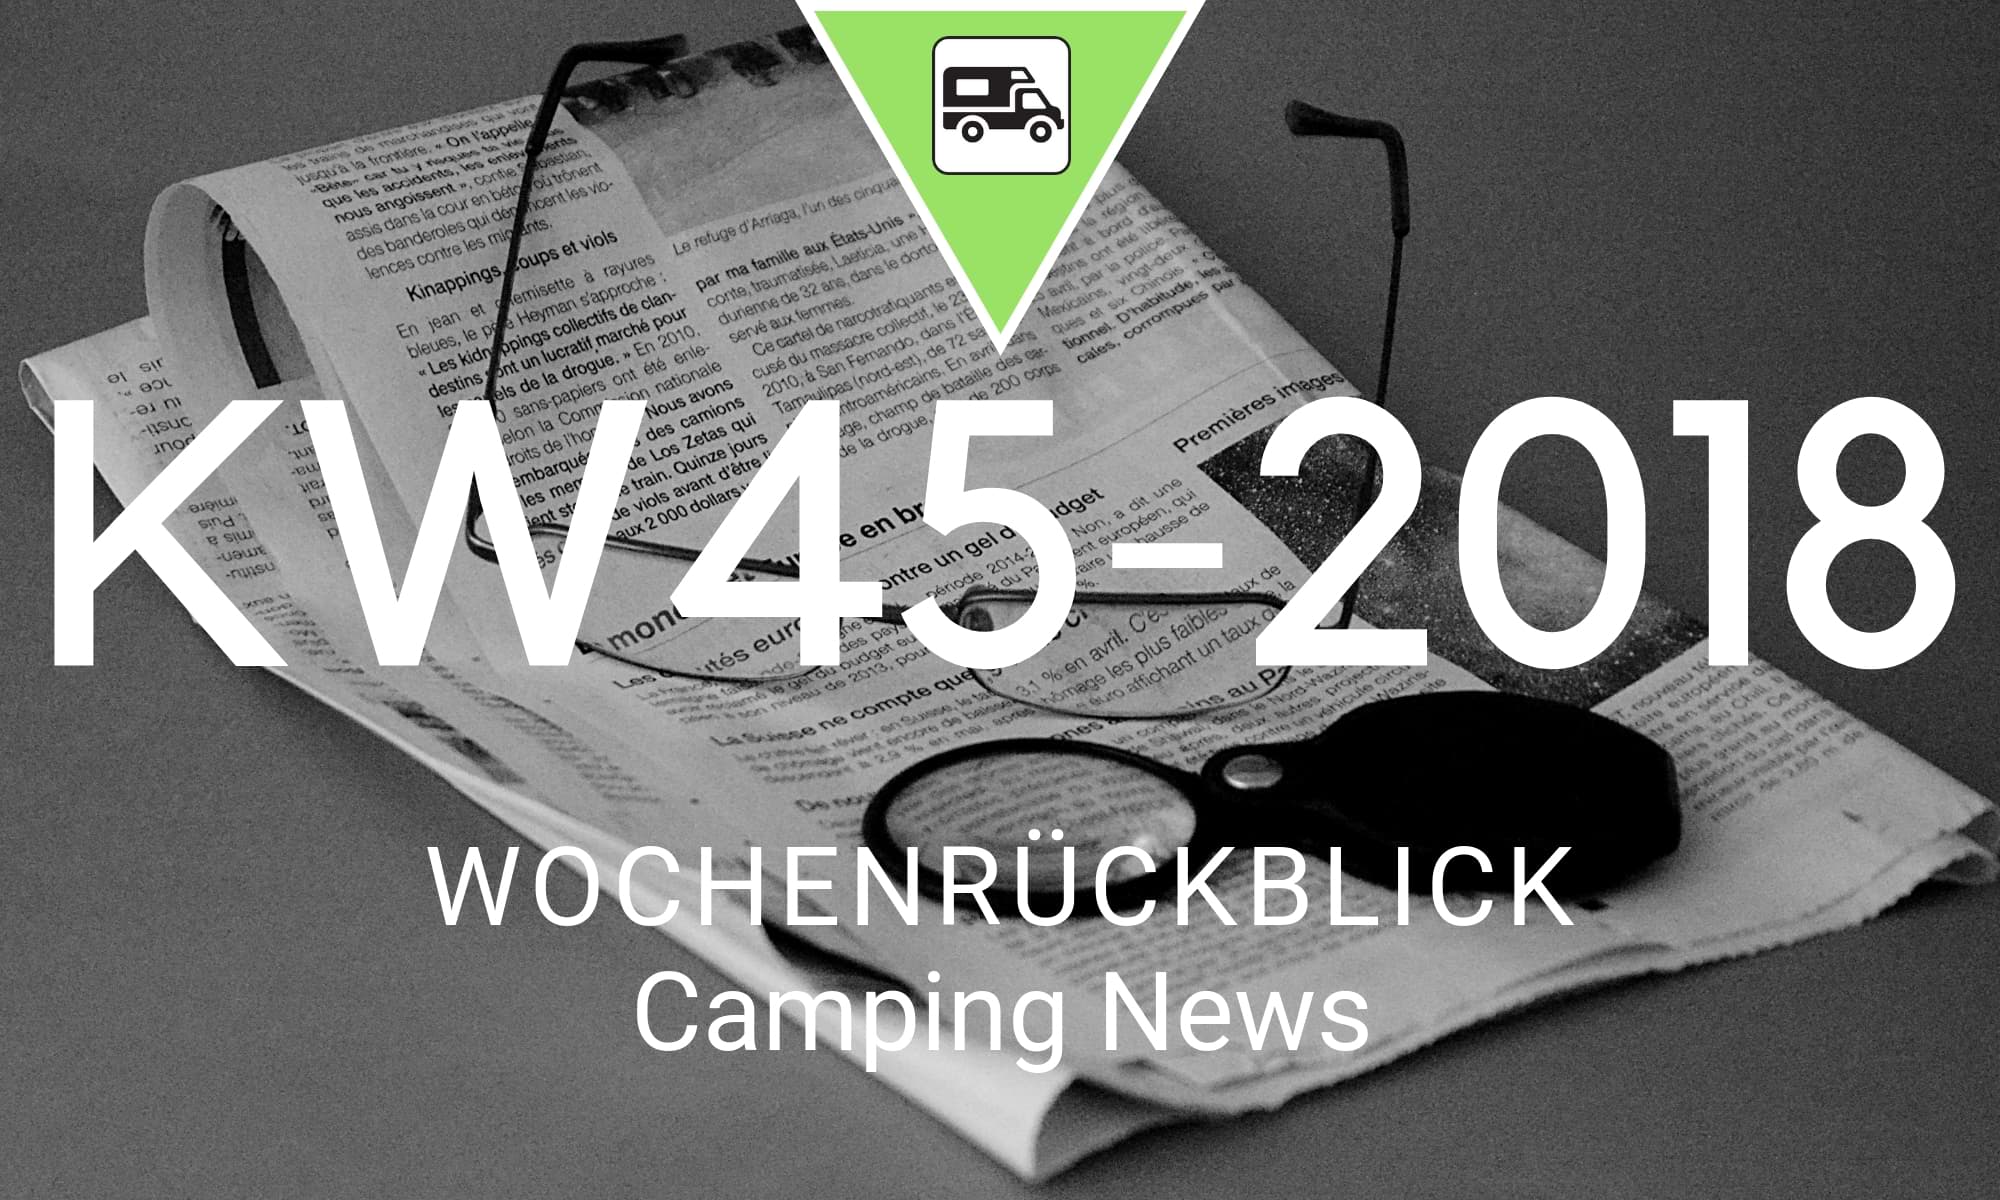 Wochenrückblick Camping News KW45-2018